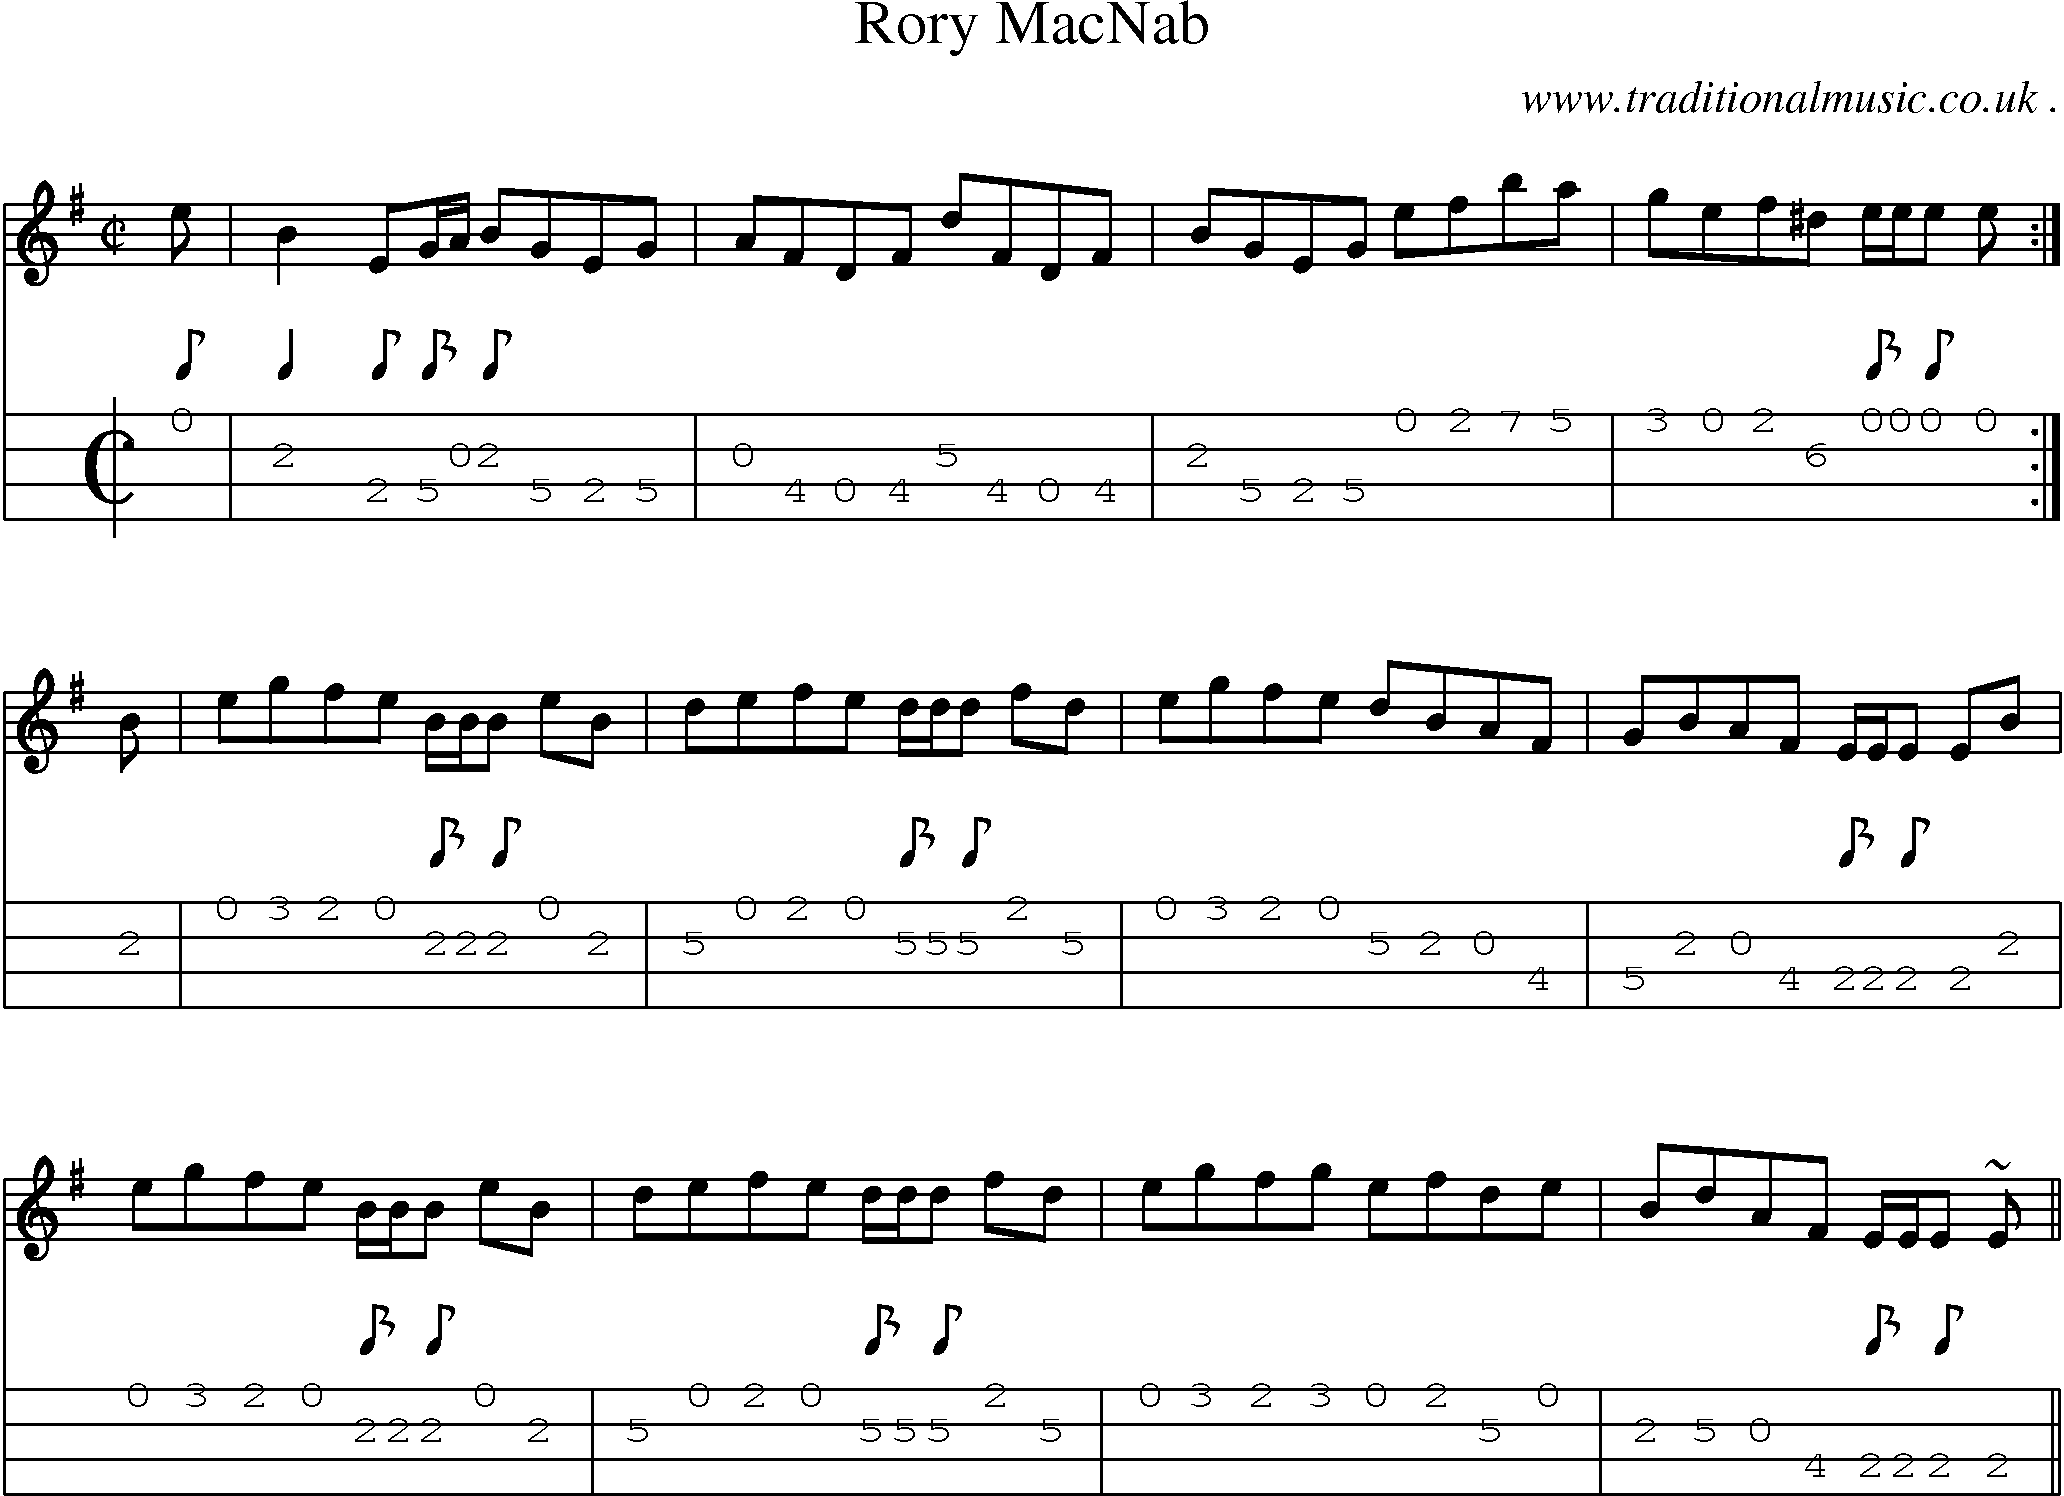 Sheet-music  score, Chords and Mandolin Tabs for Rory Macnab